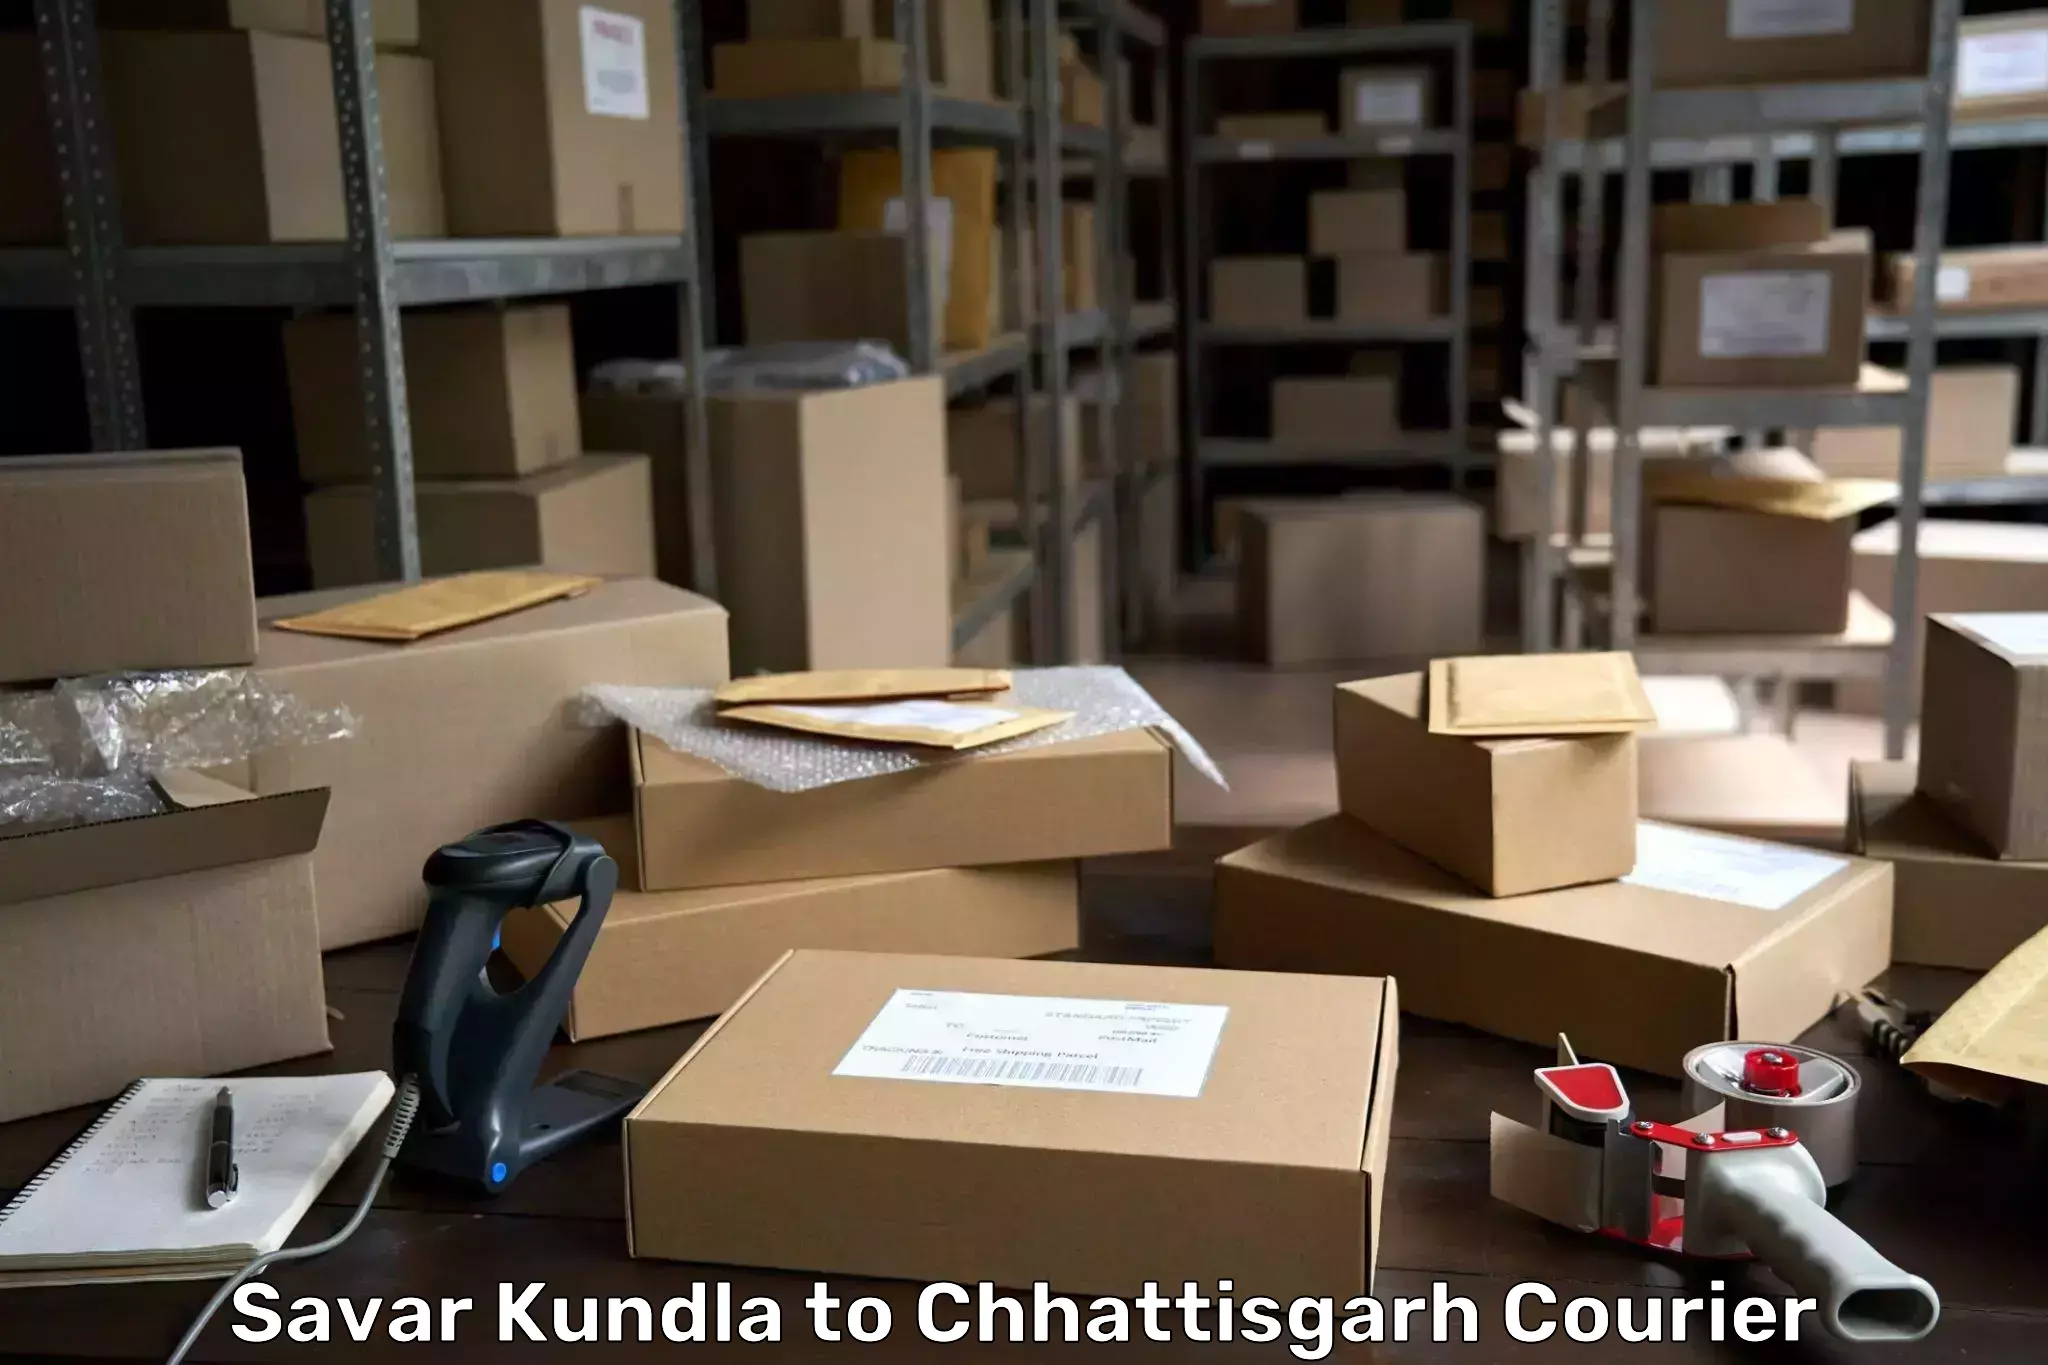 High-priority parcel service Savar Kundla to Chhattisgarh